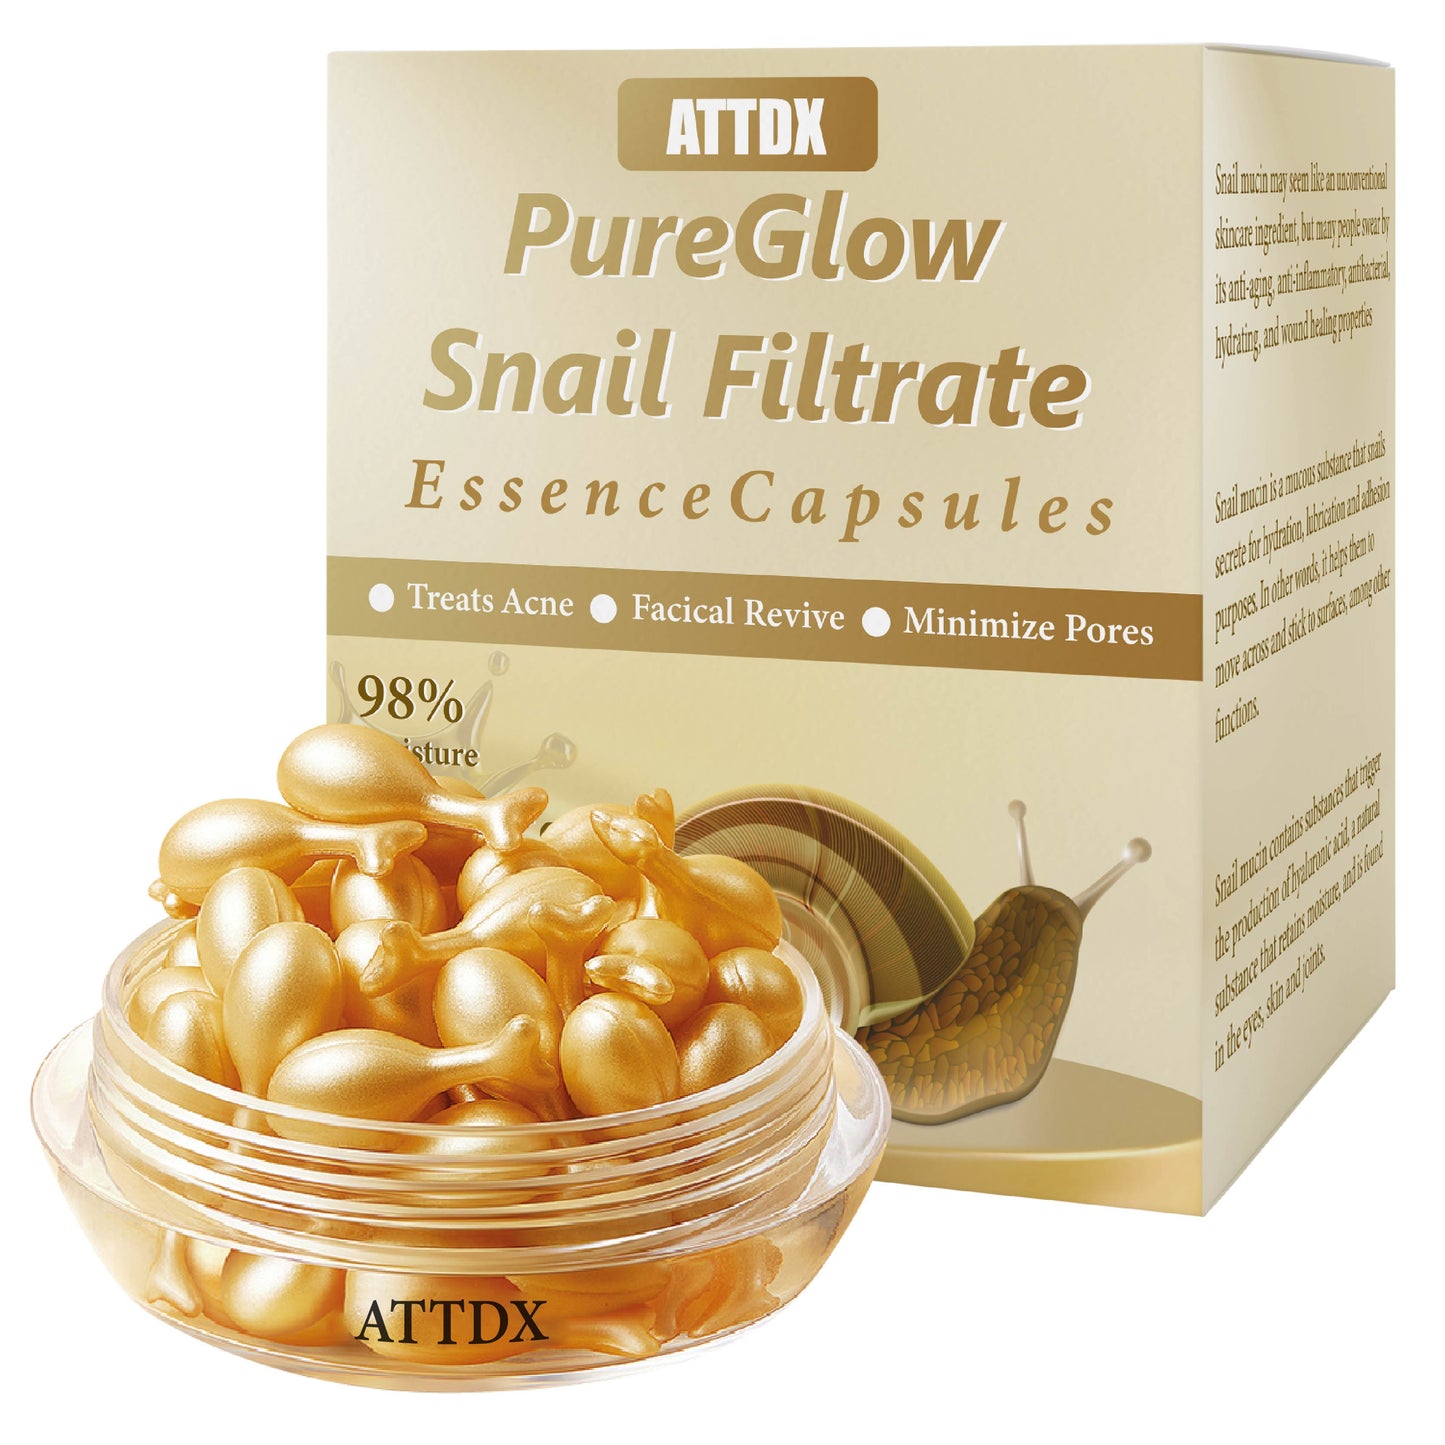 PureGlow Snail Filtrate Essence Capsules